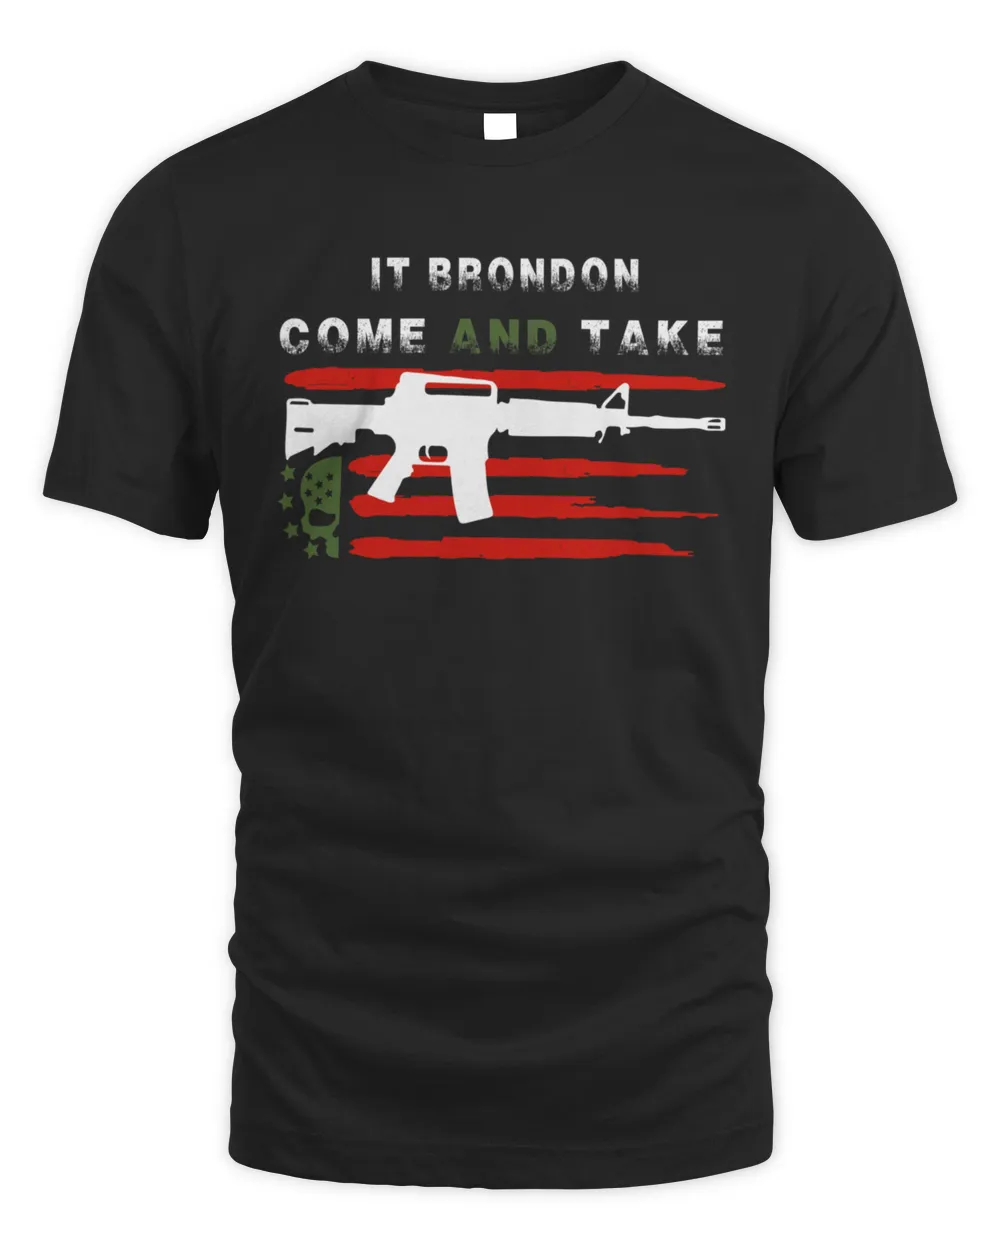 come and take it brandon9618 T-Shirt